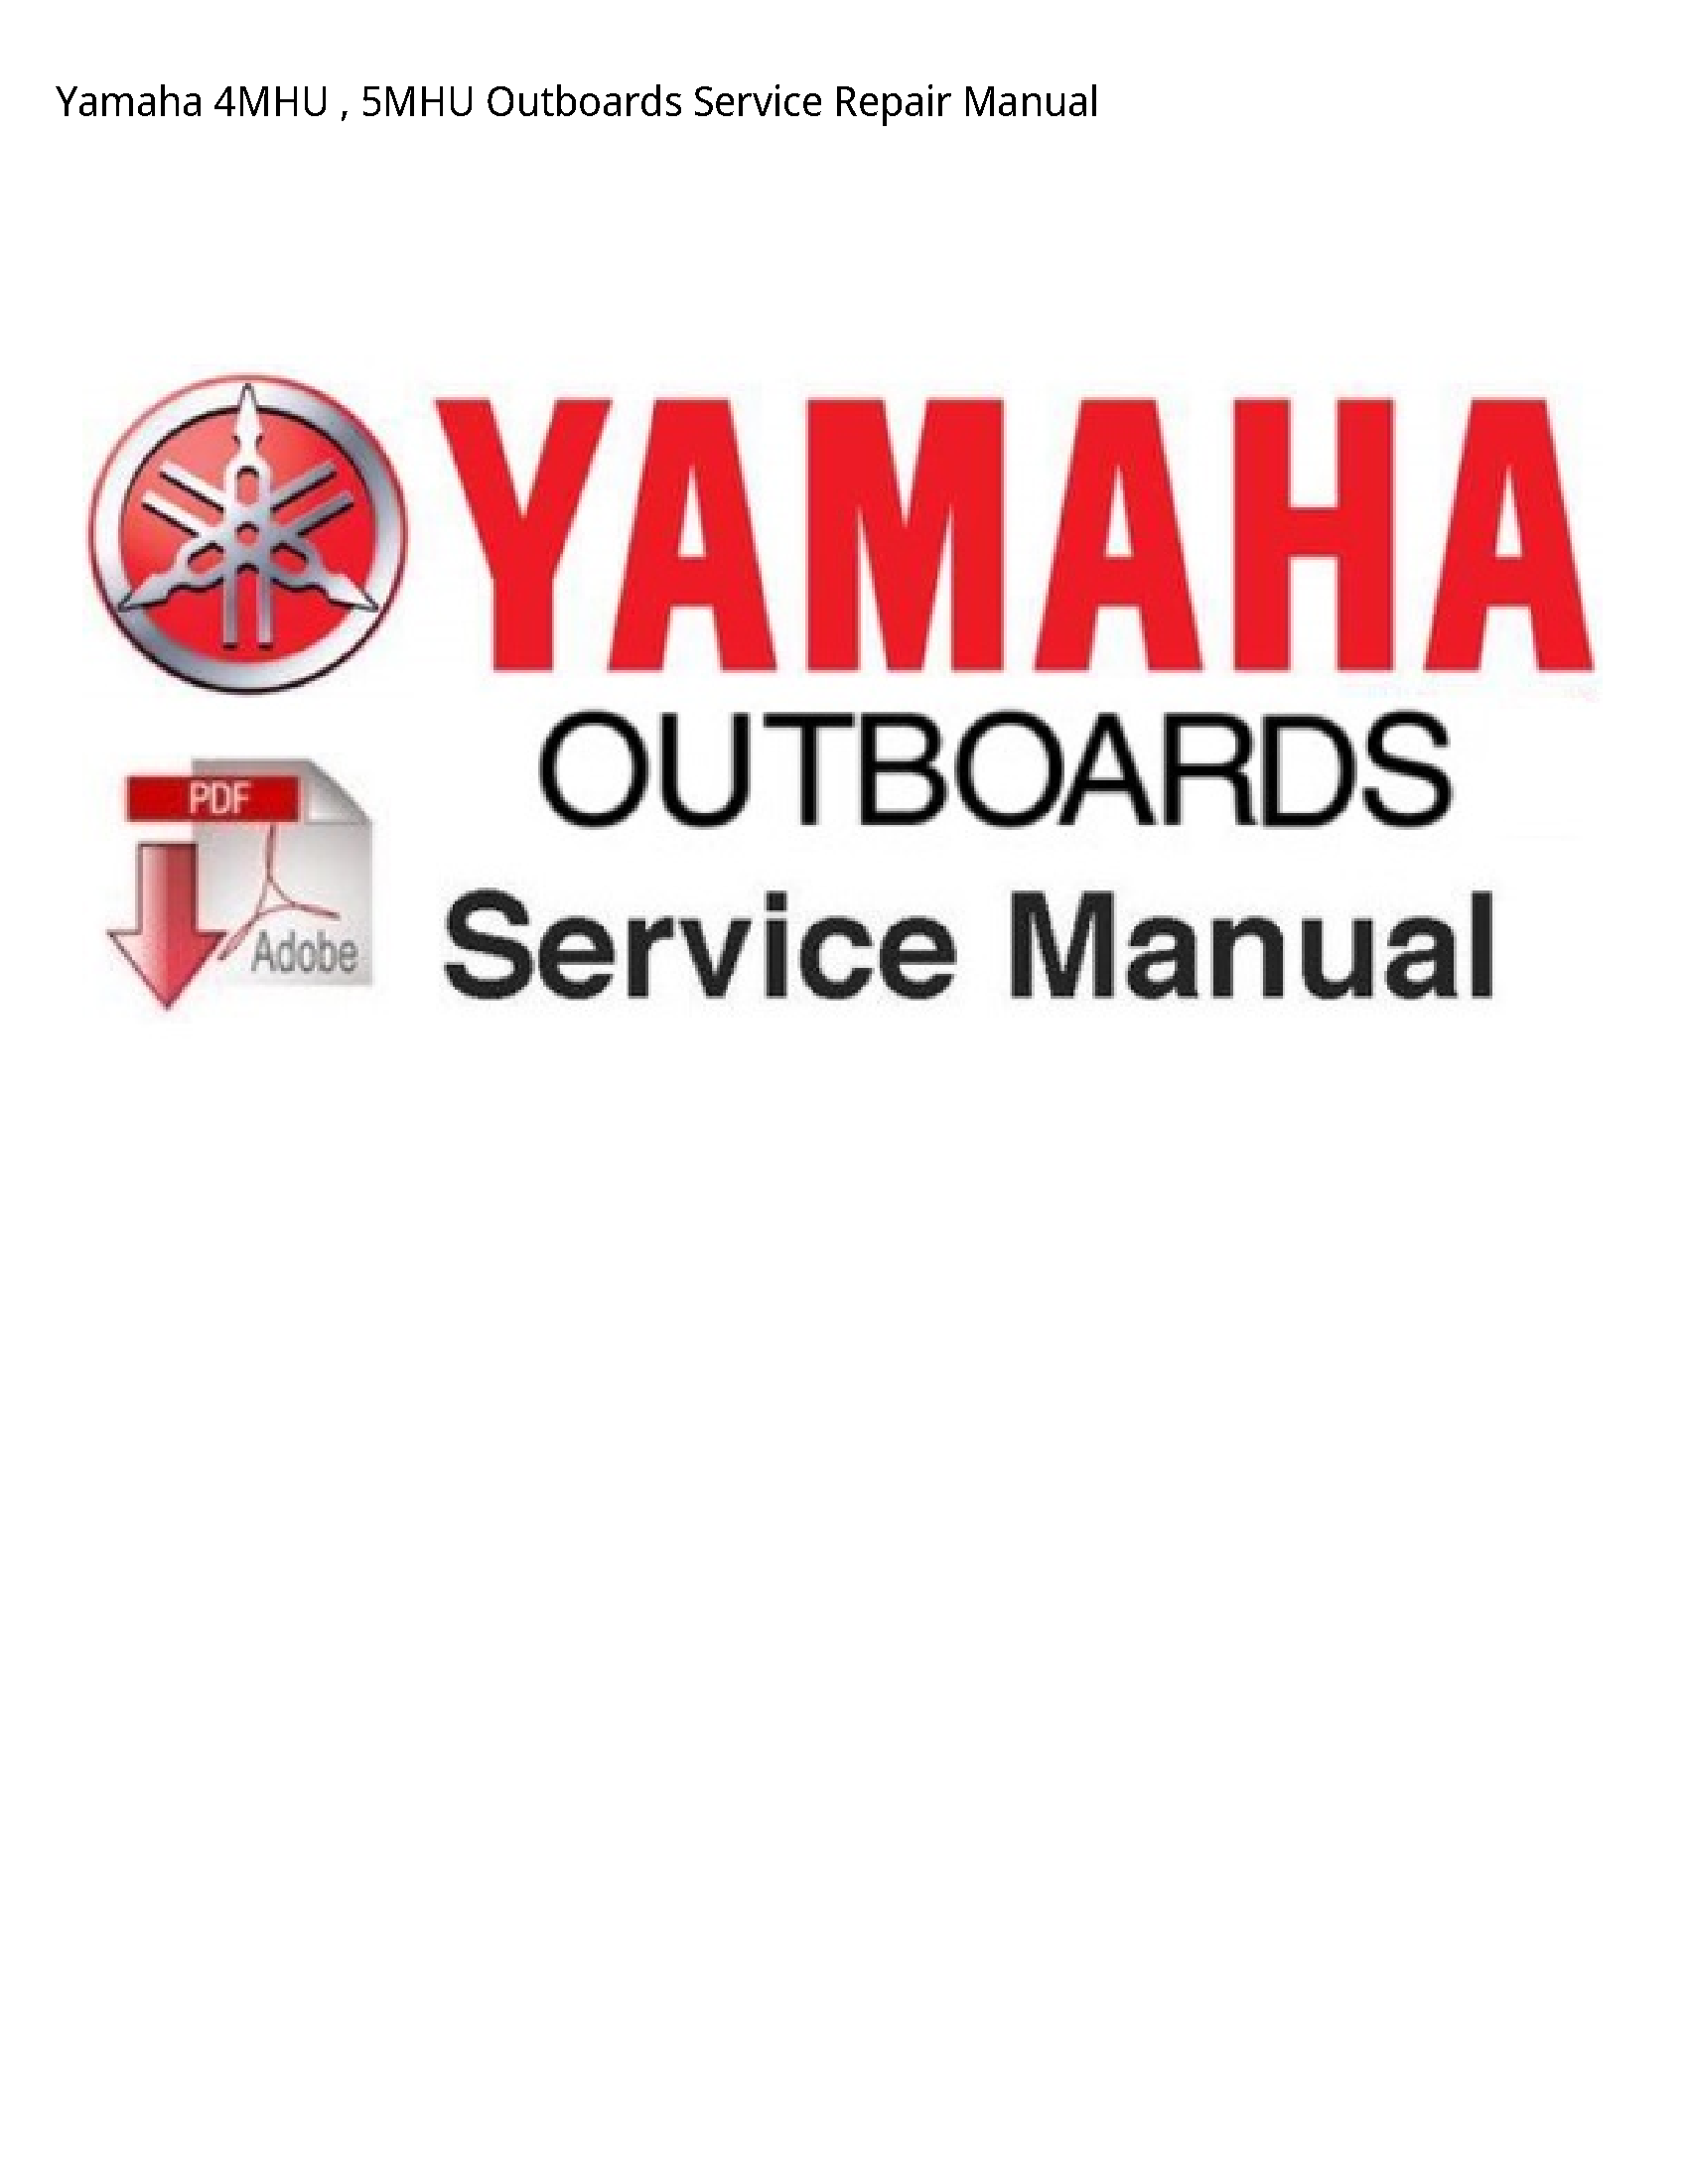 Yamaha 4MHU Outboards manual